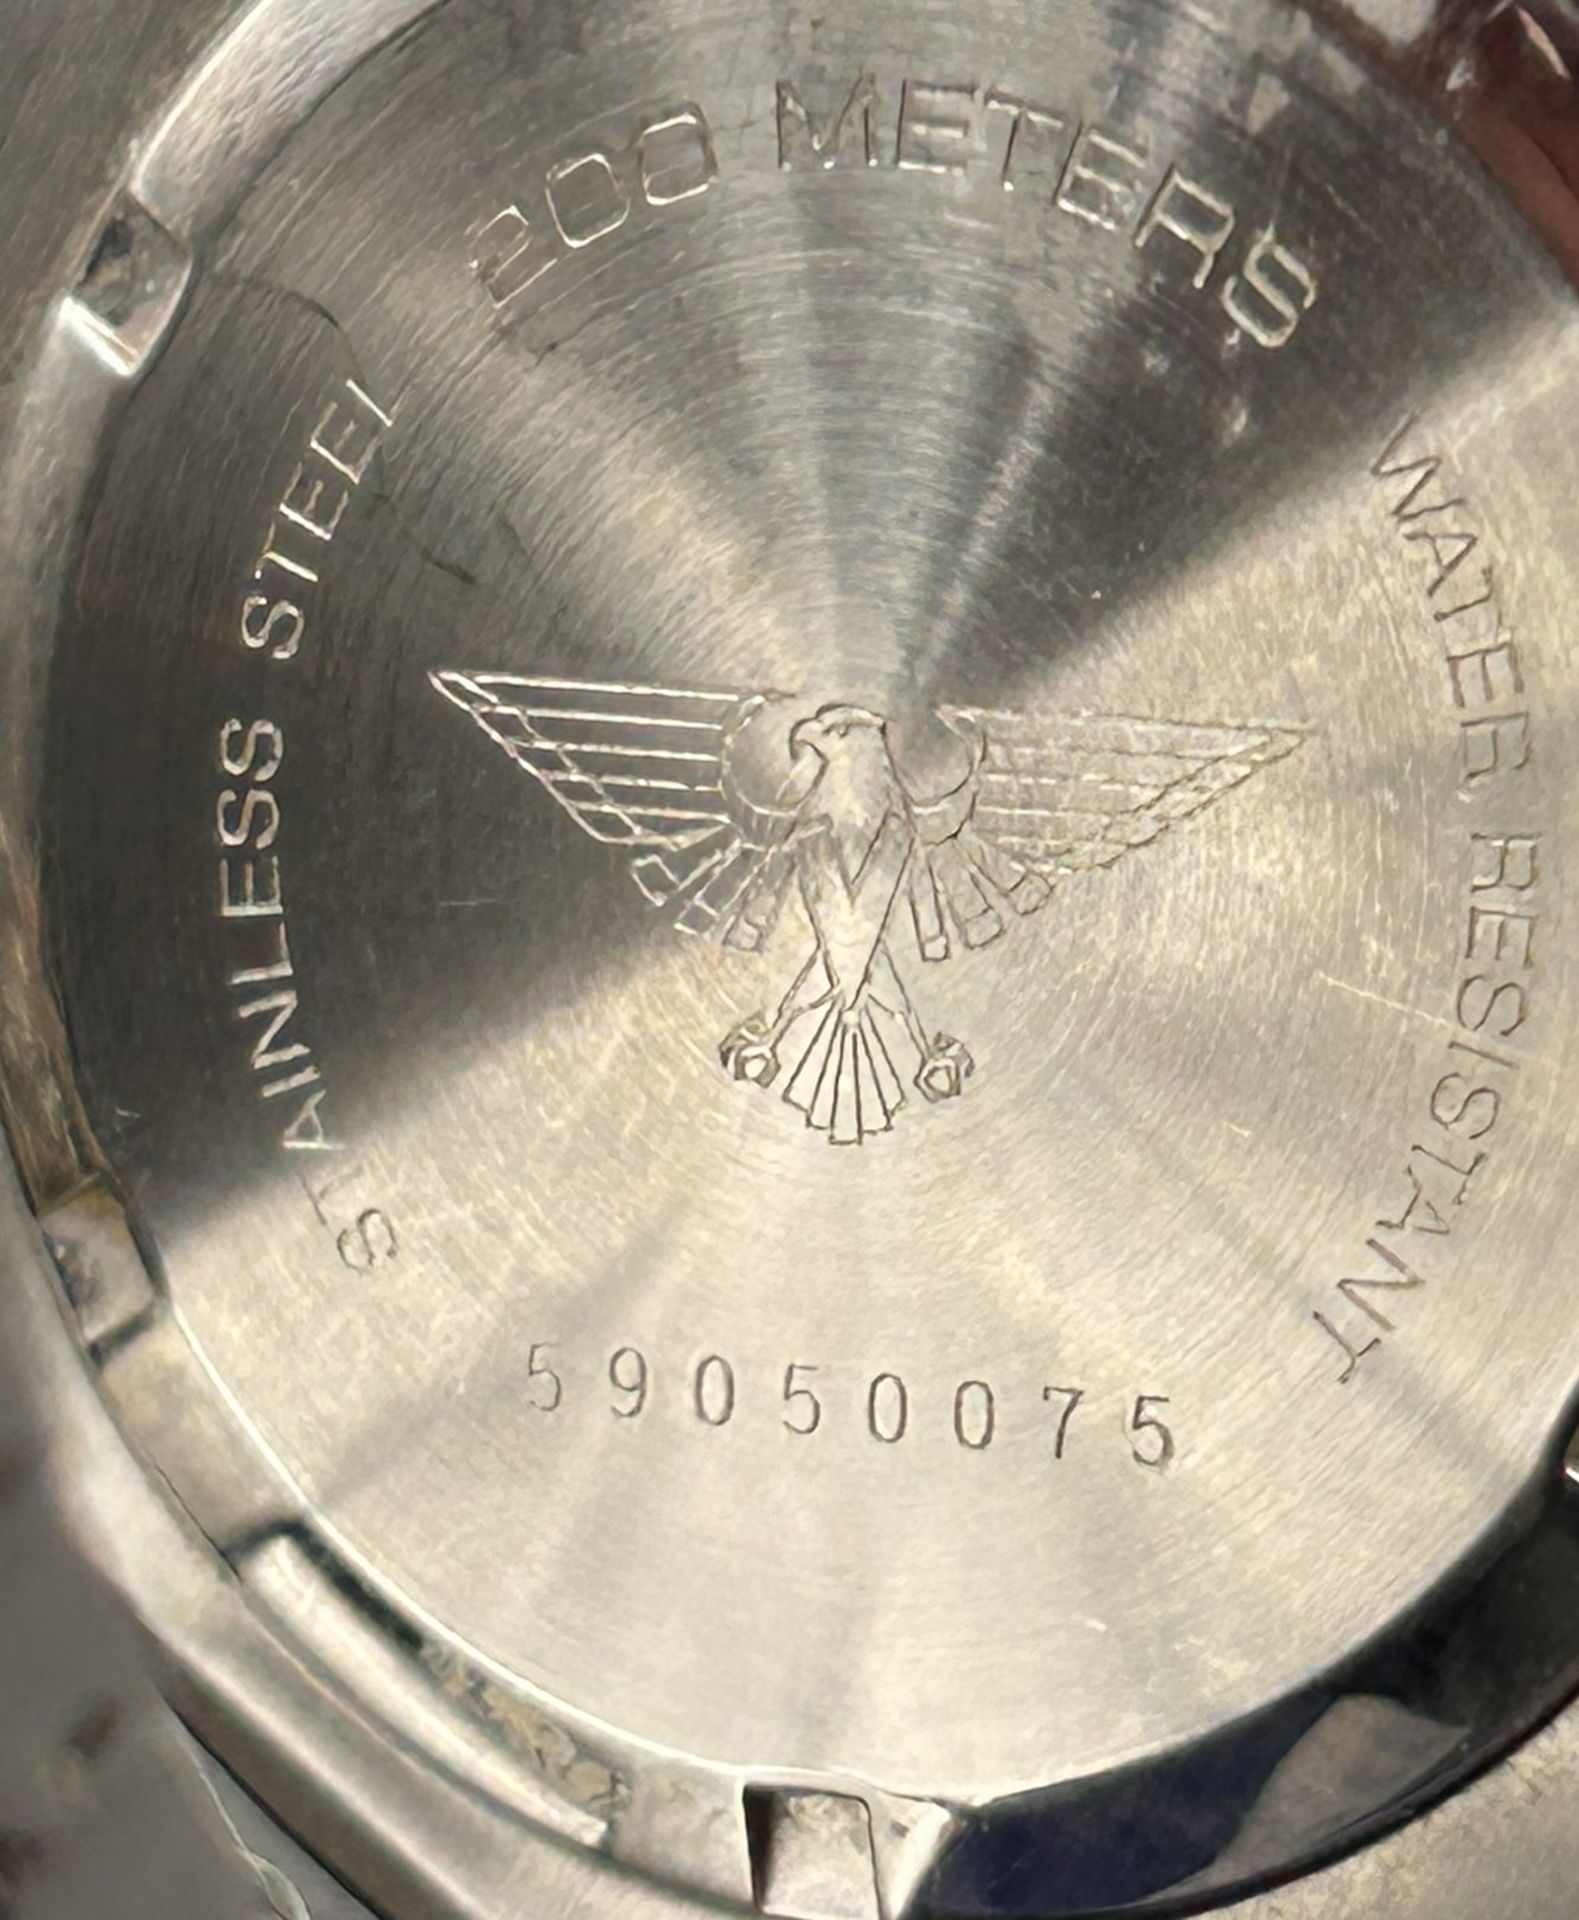 Army watch chrono, 200 m, Stahlband, Nr. 59050075, nicht überprüft - Image 4 of 4